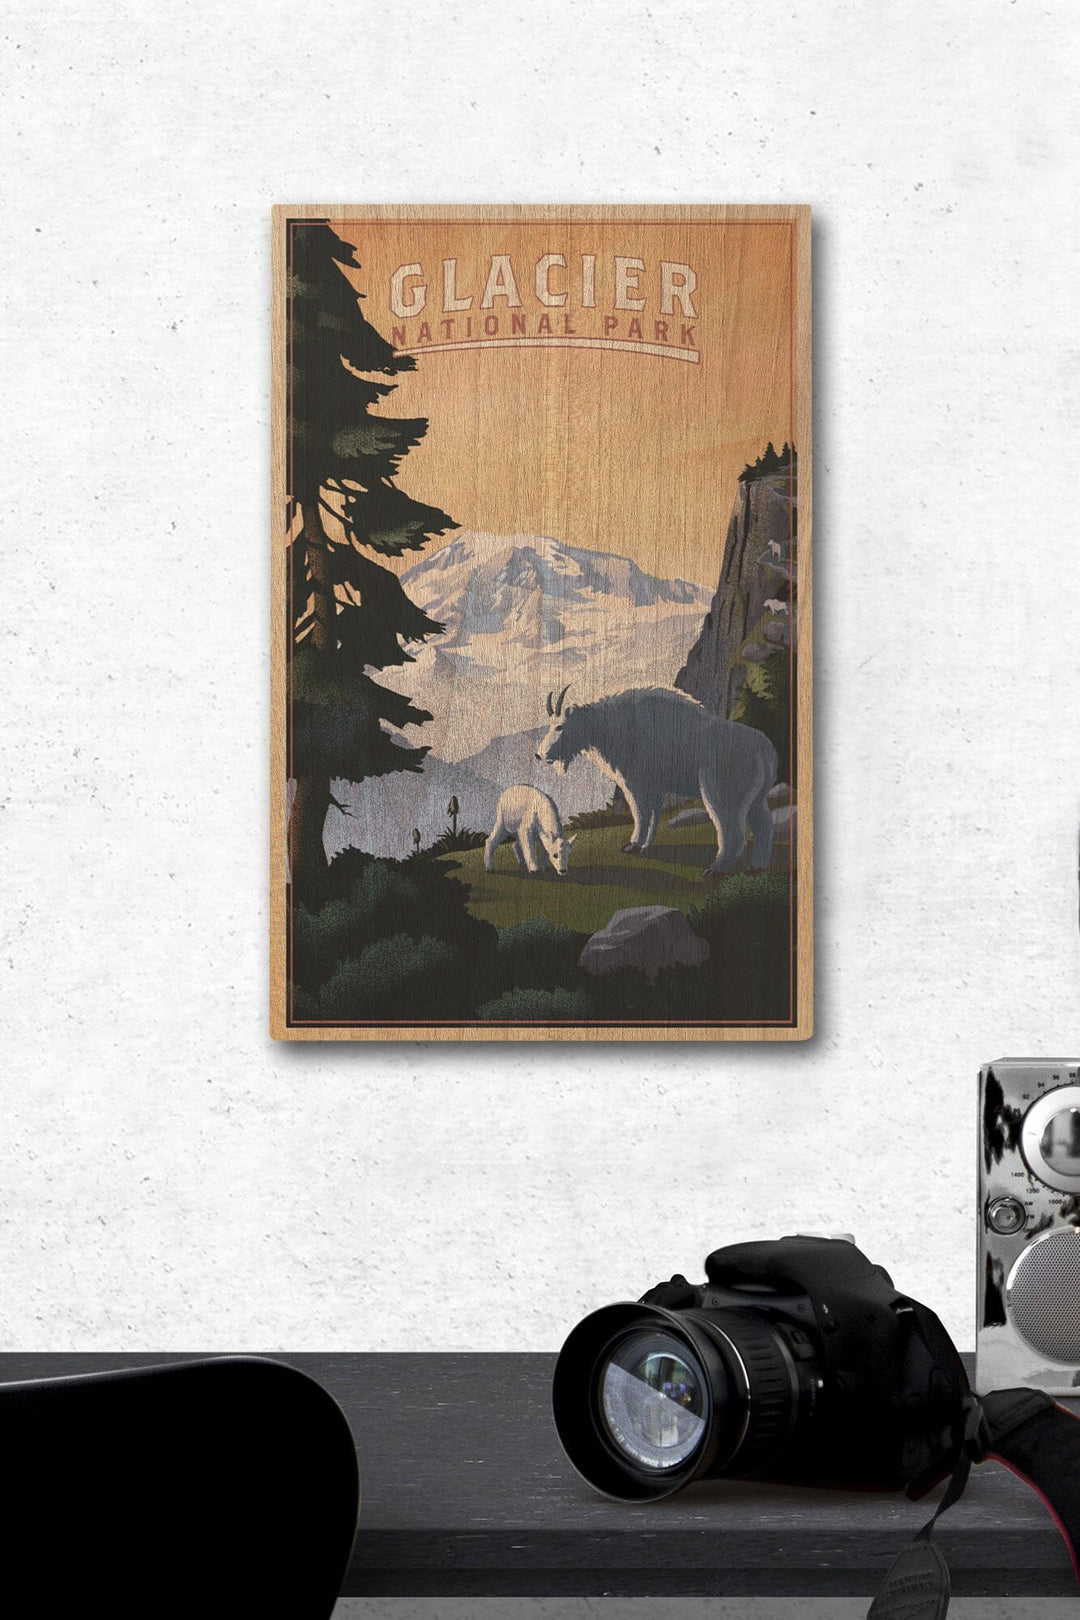 Glacier National Park, Mountain Goats & Mountain, Lantern Press Artwork, Wood Signs and Postcards Wood Lantern Press 12 x 18 Wood Gallery Print 